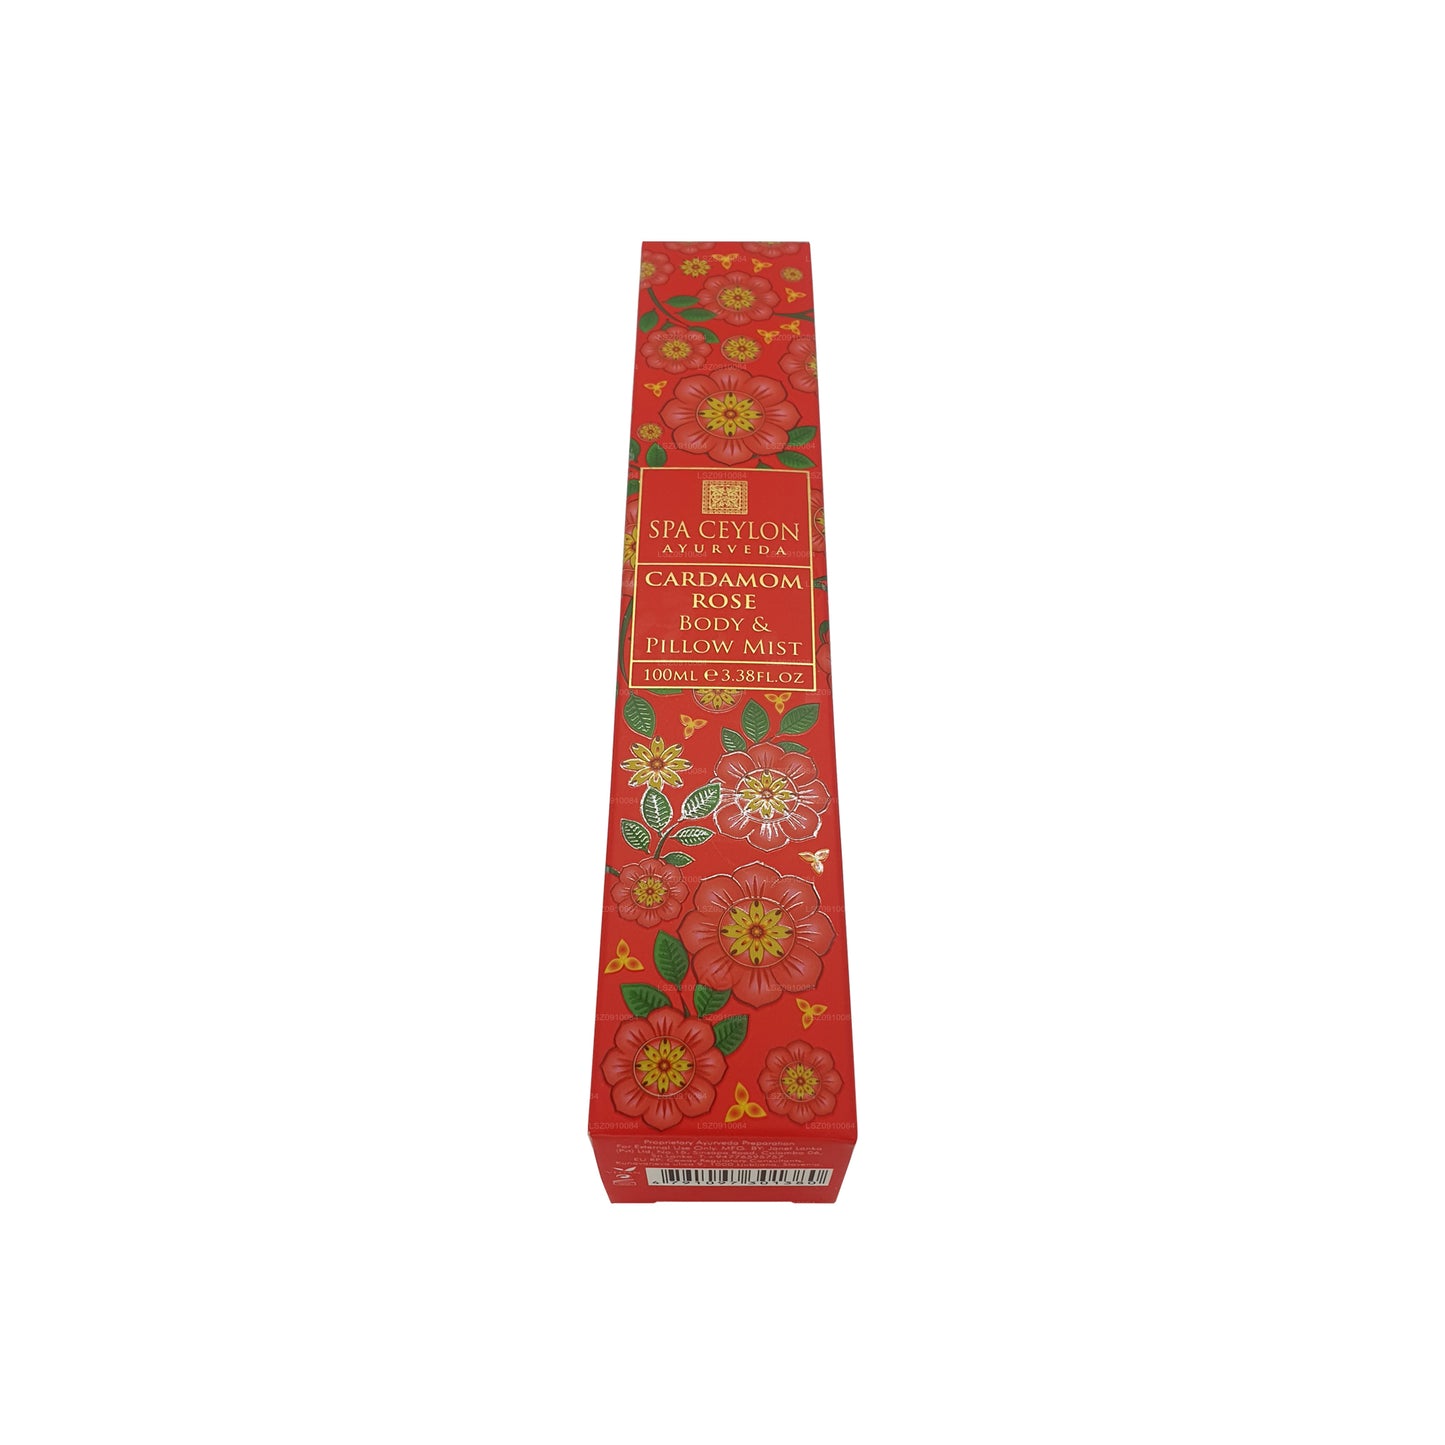 Bruma corporal y almohada Spa Ceylon Cardamomo Rose (100 ml)